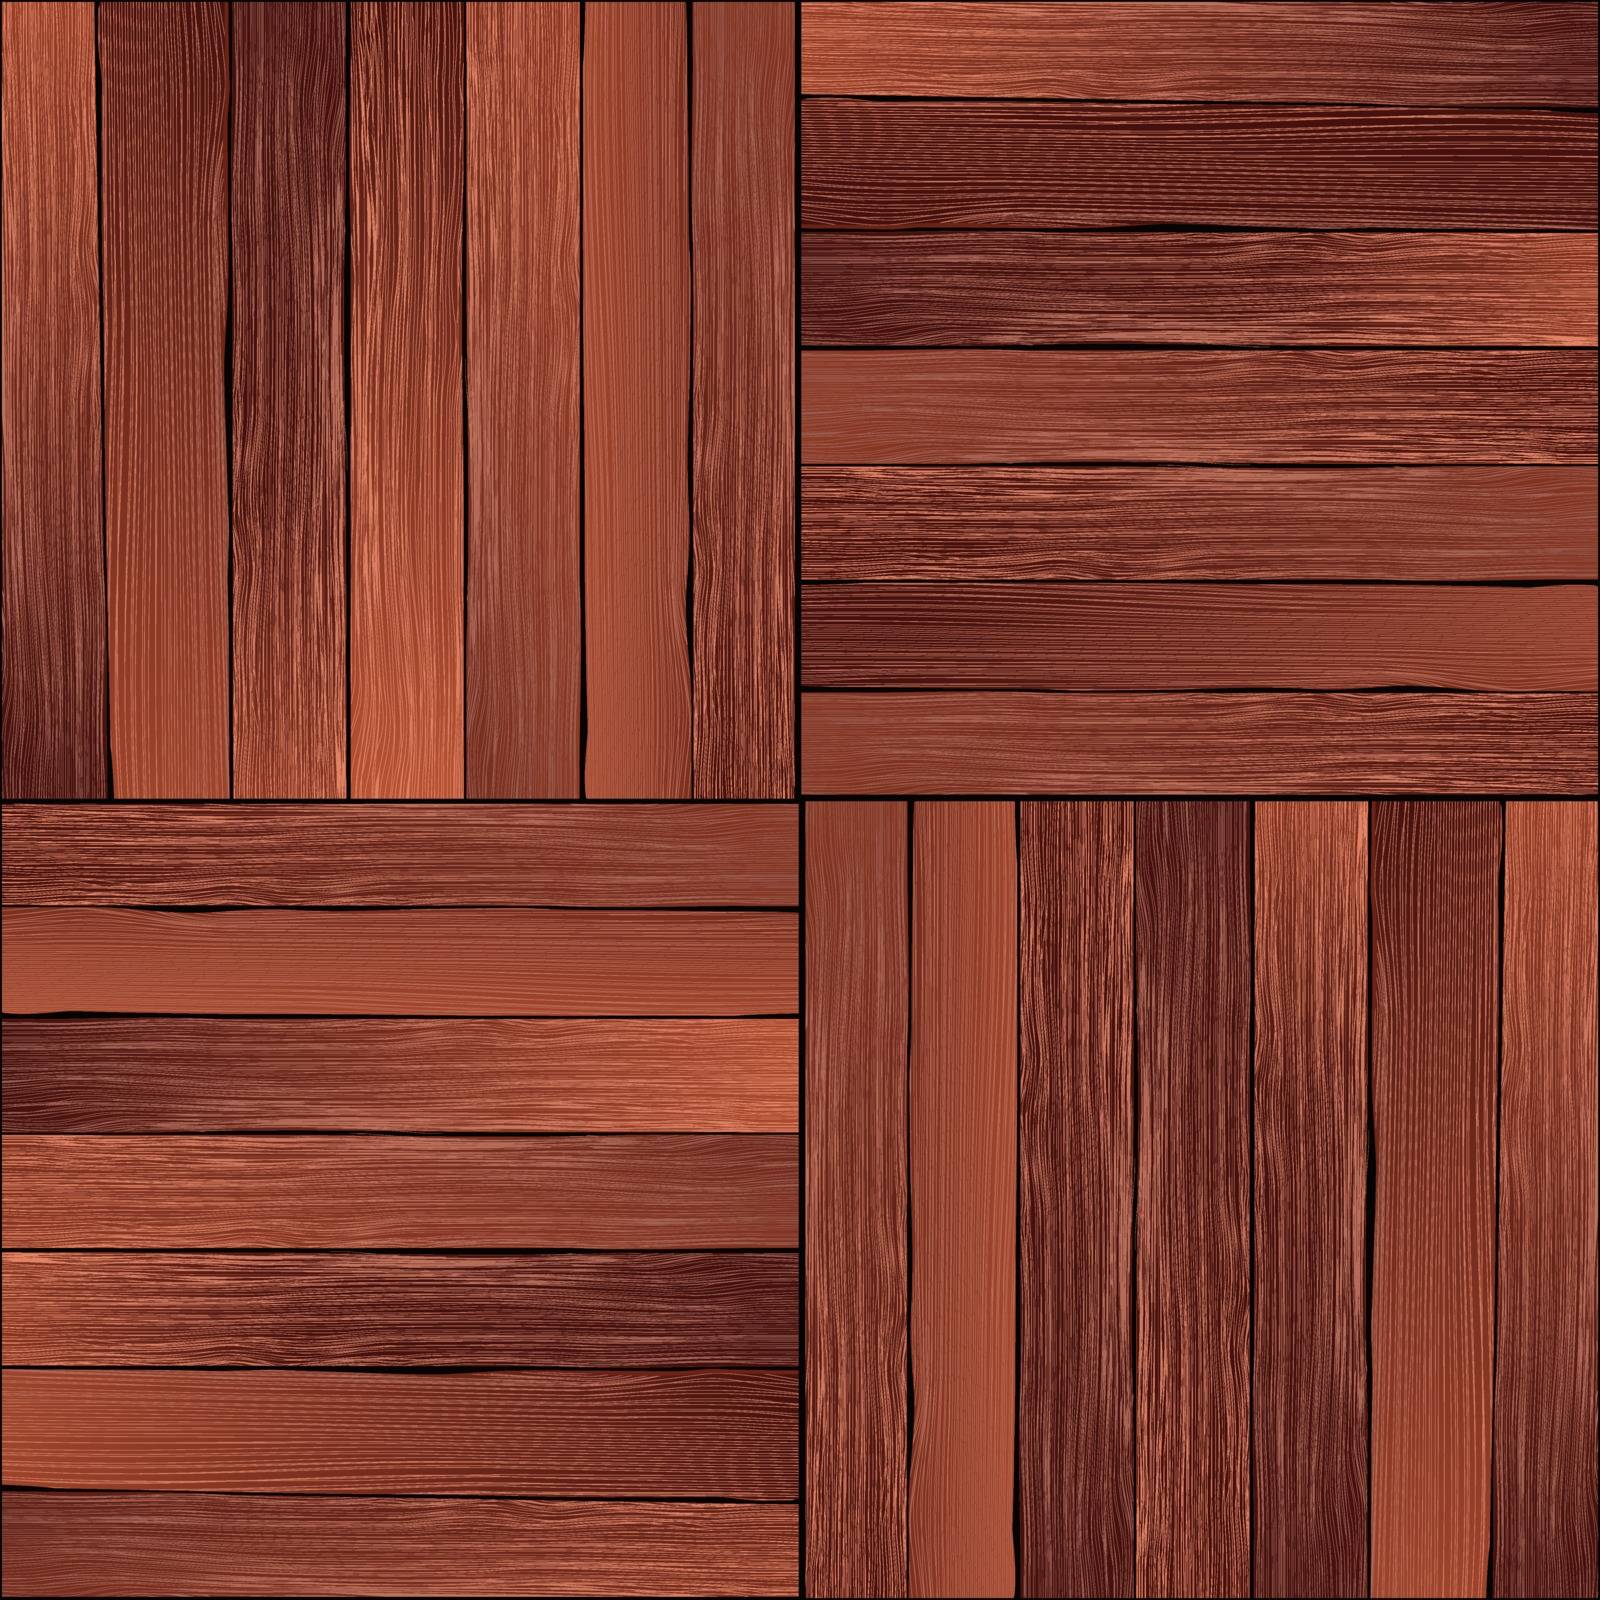 Vintage hardwood floor pattern by Lirch